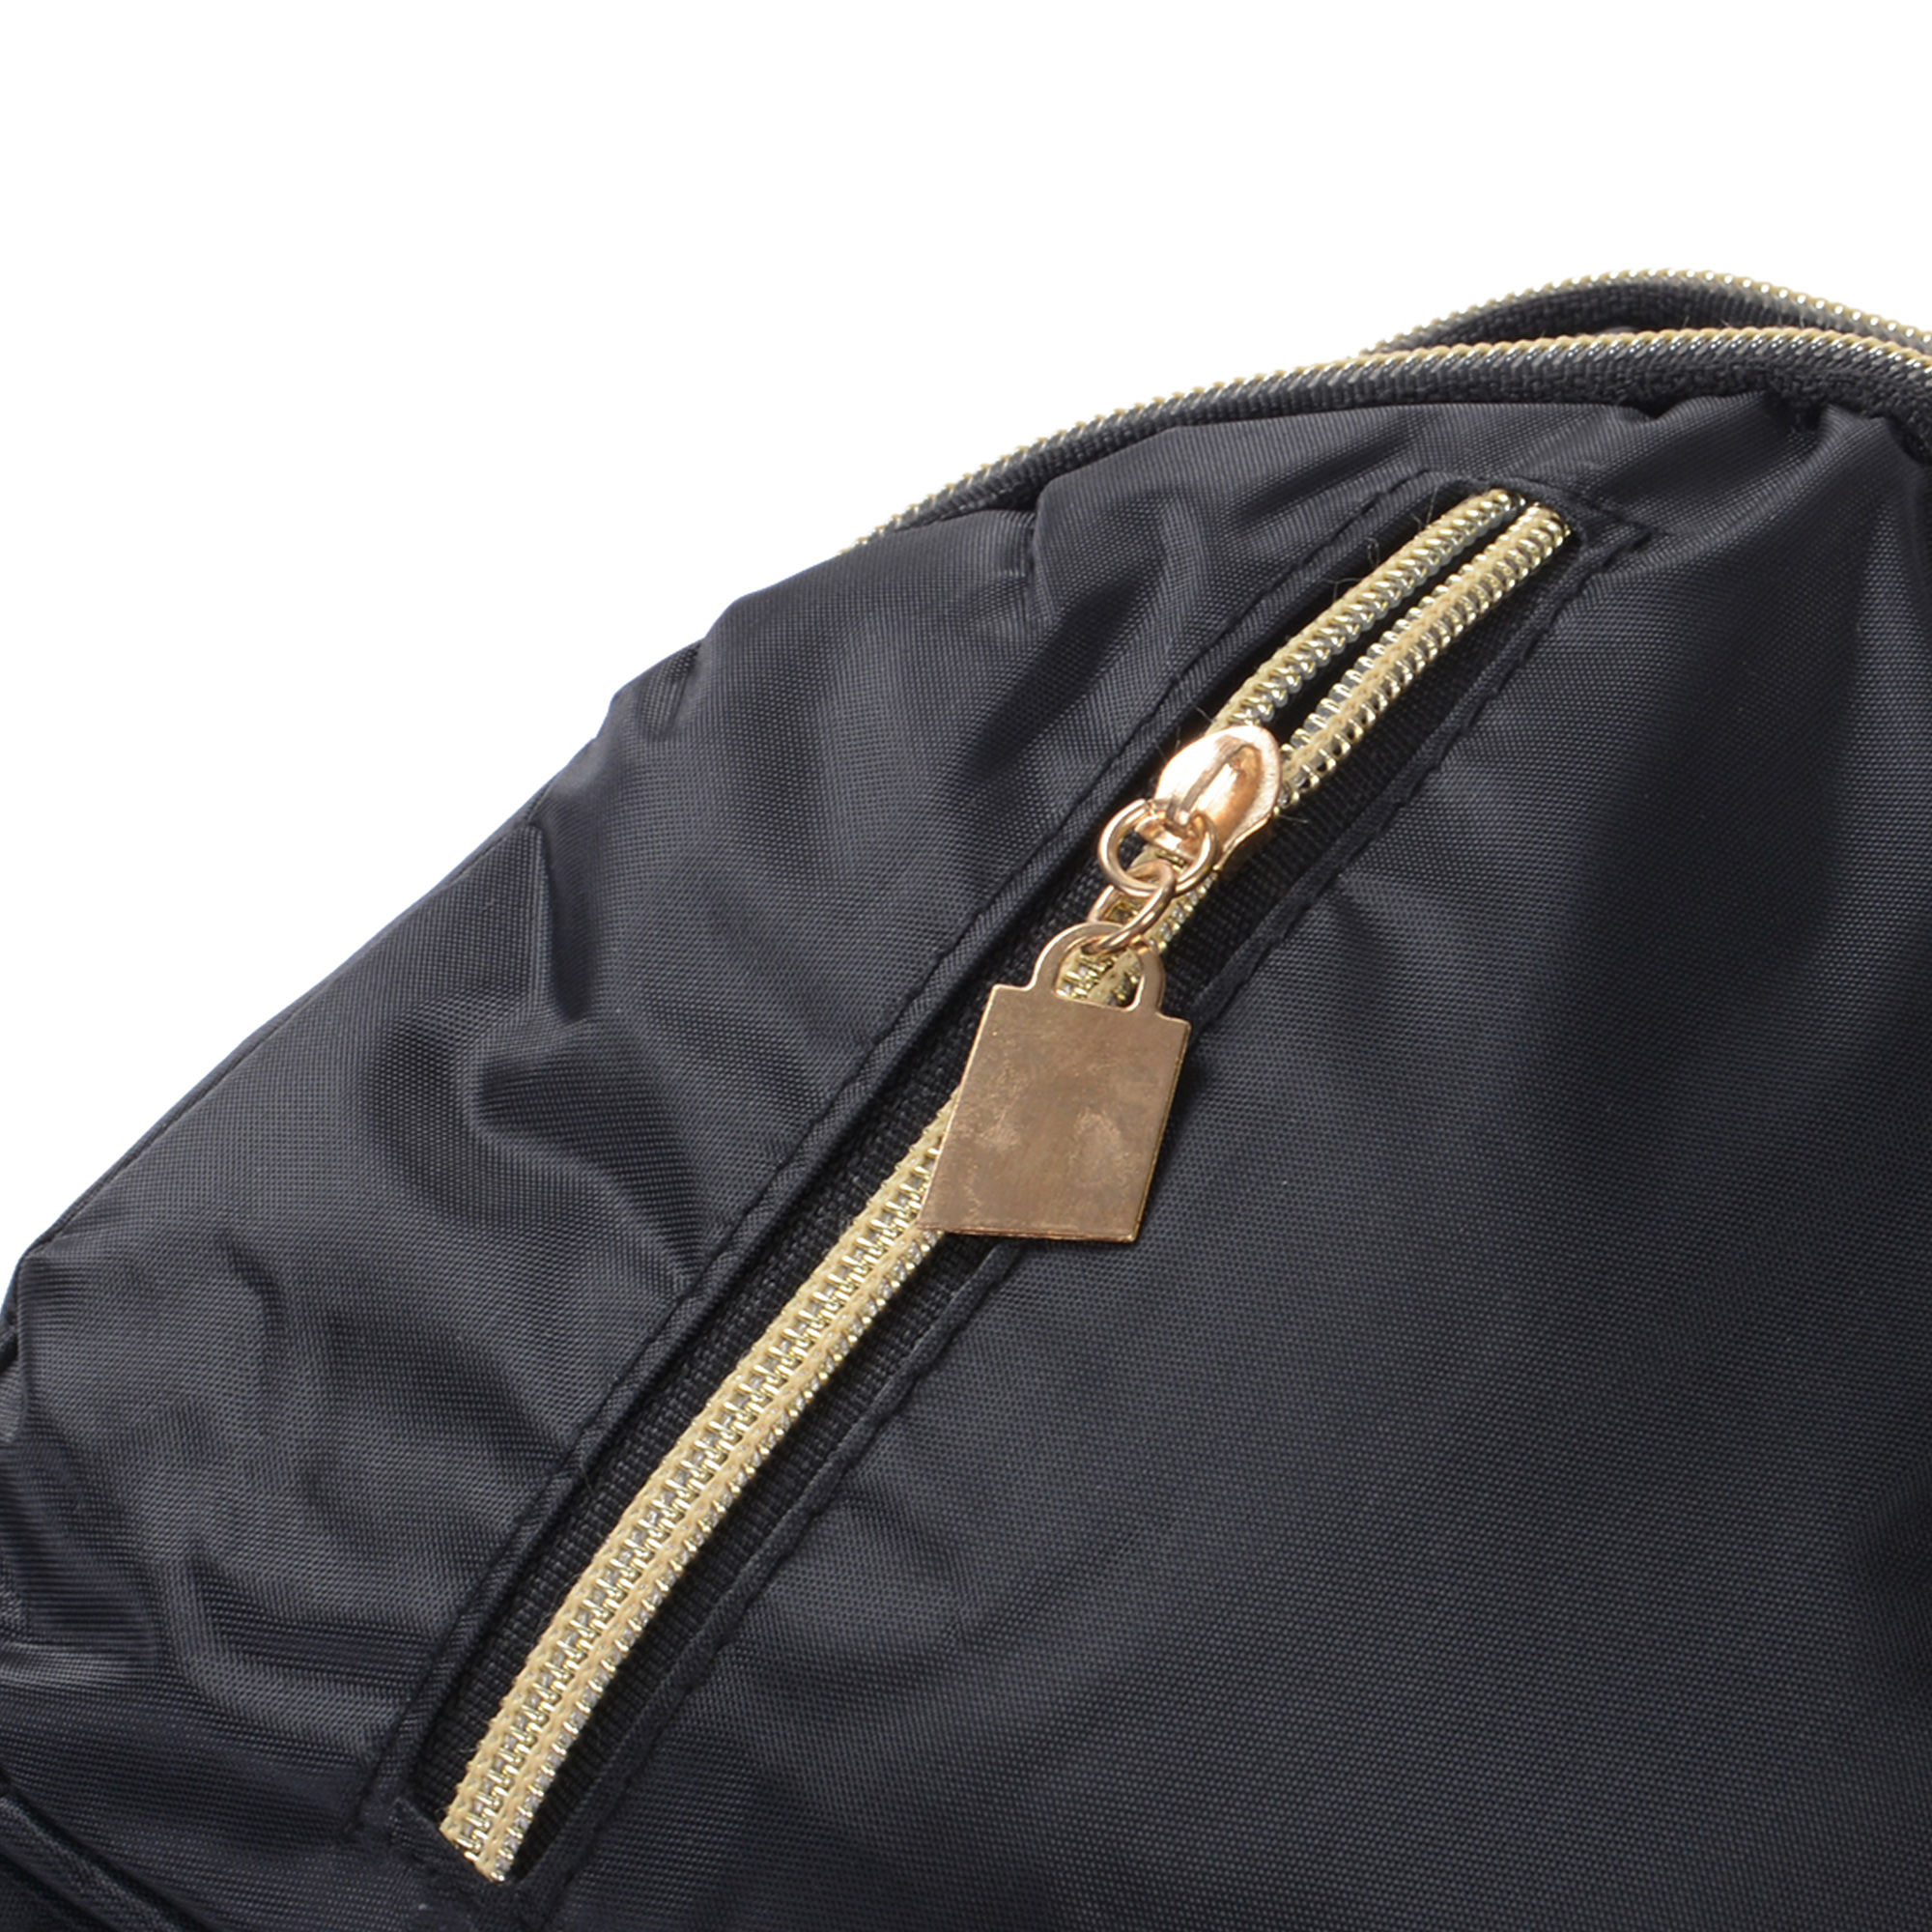 Hirigin Women Girls Black Nylon Mini Backpack Travel School Backpack Shoulder Bags - image 4 of 6